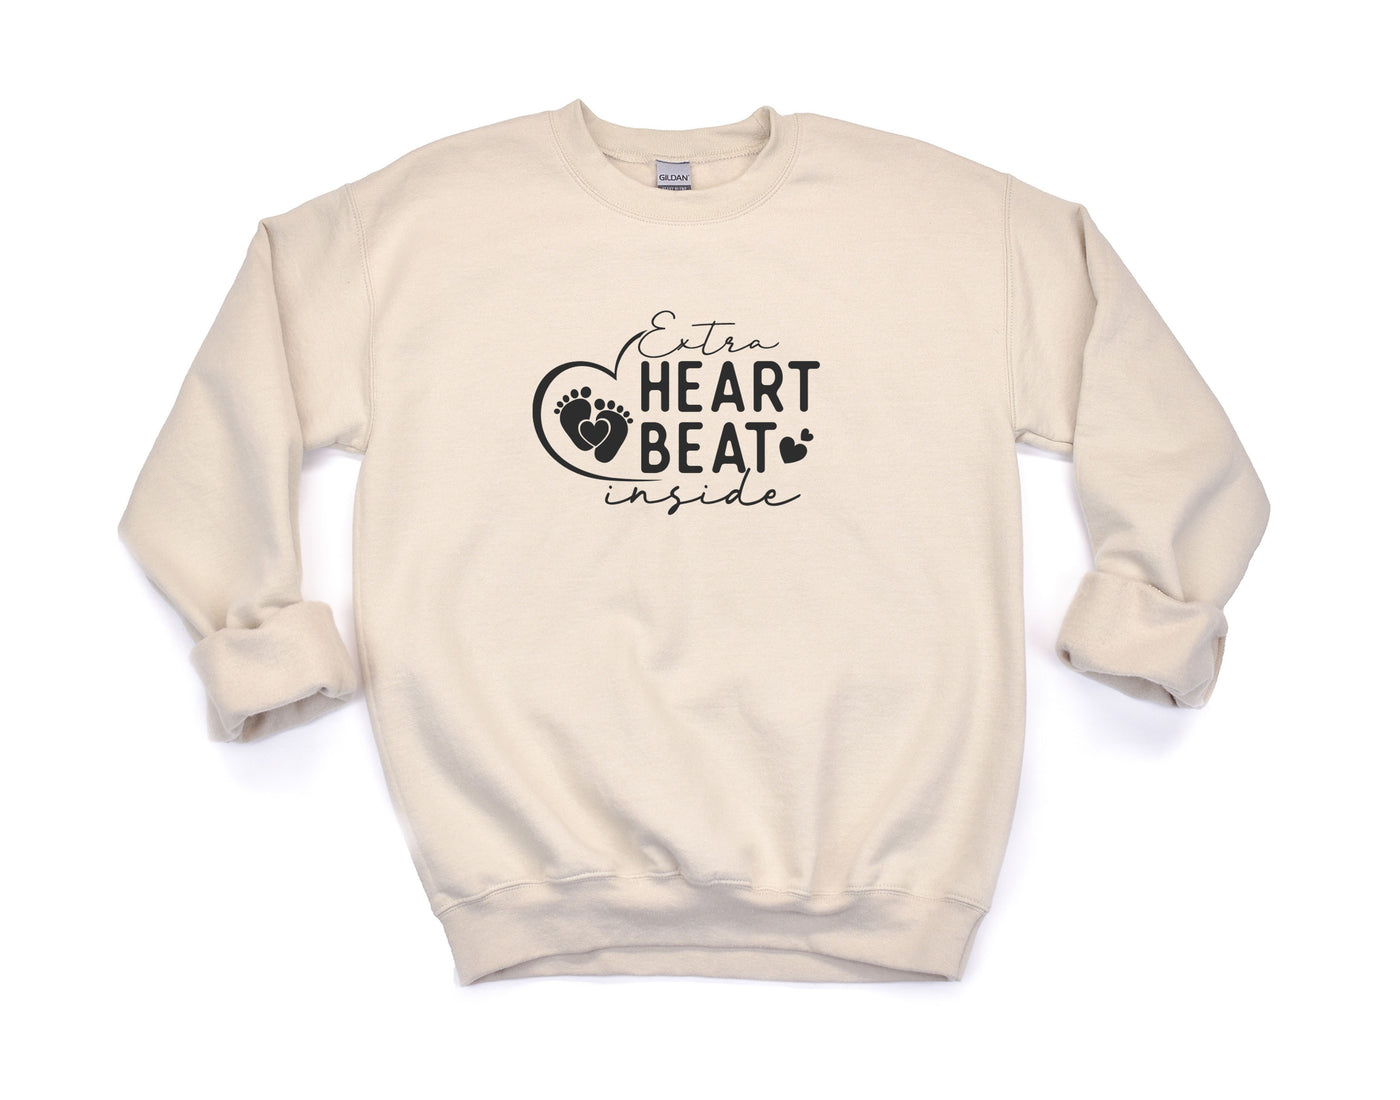 Extra Heartbeat Inside(heart)